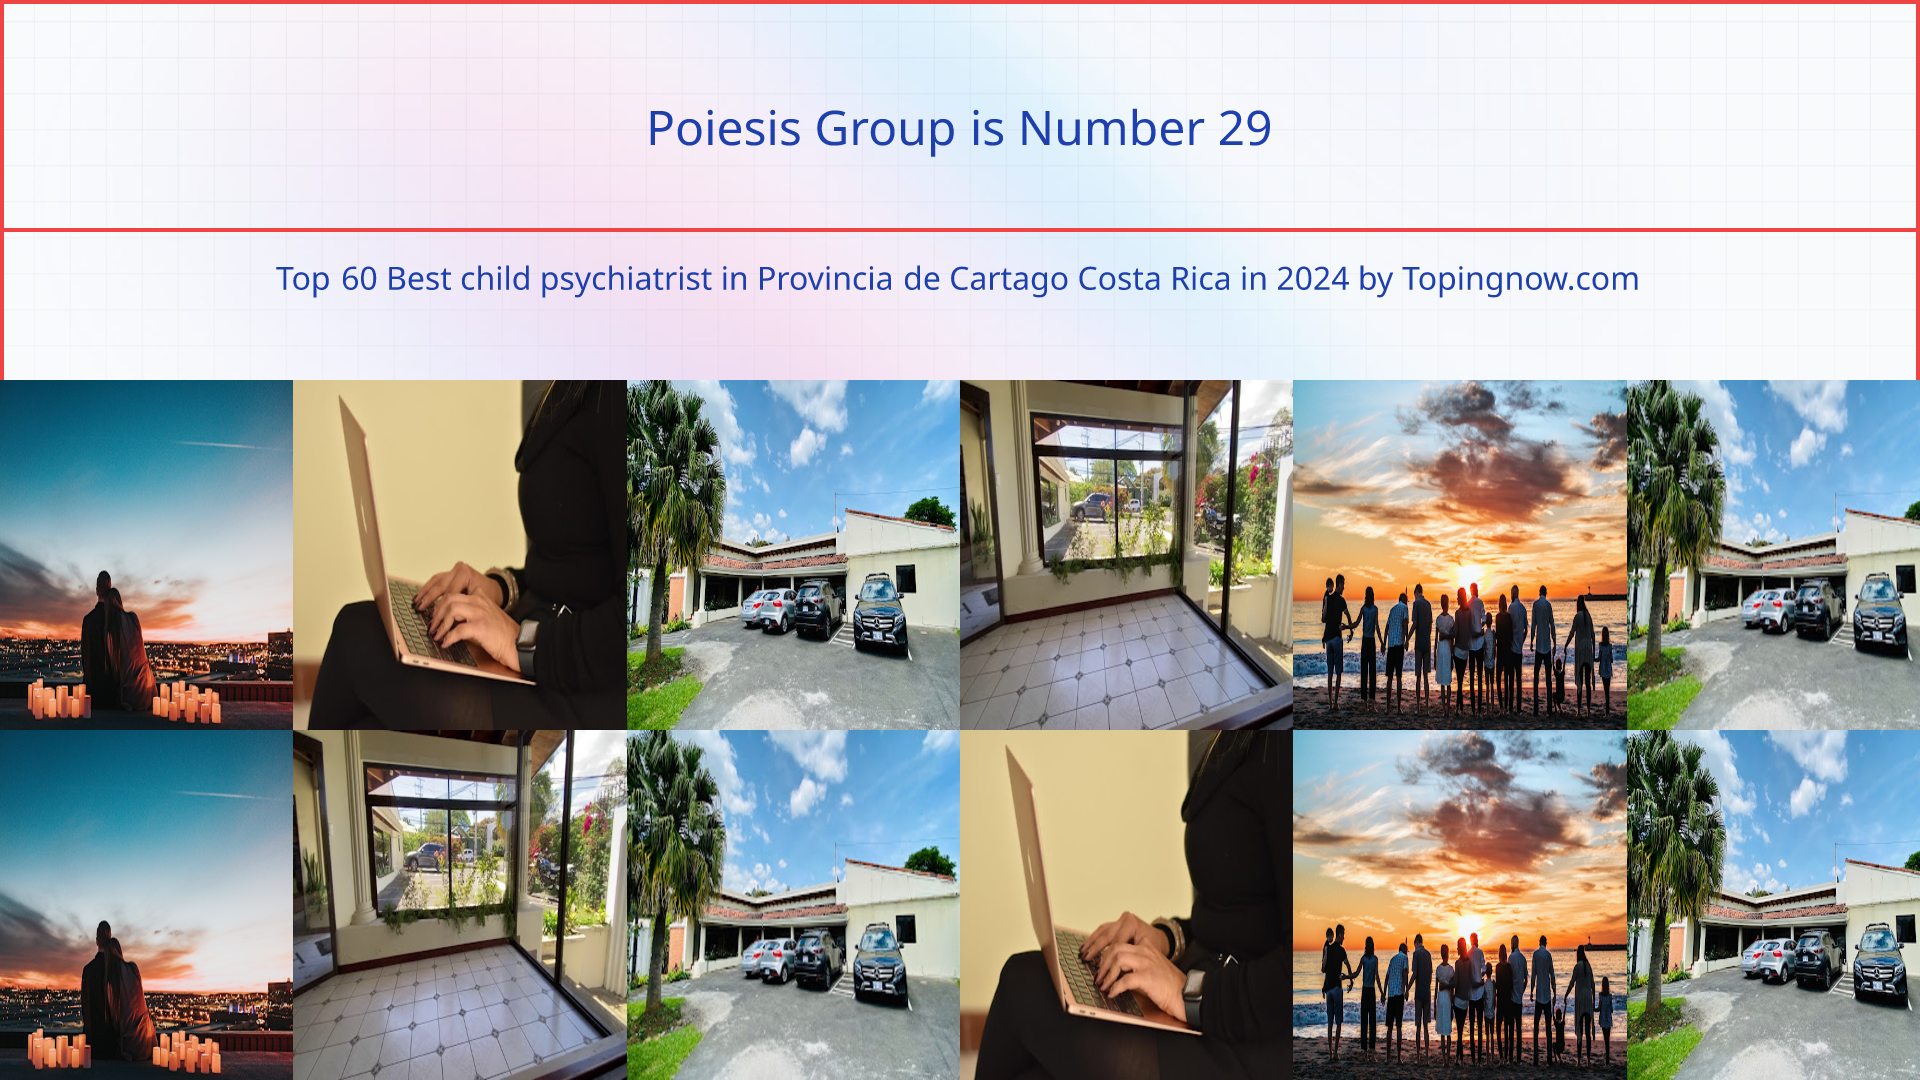 Poiesis Group: Top 60 Best child psychiatrist in Provincia de Cartago Costa Rica in 2024